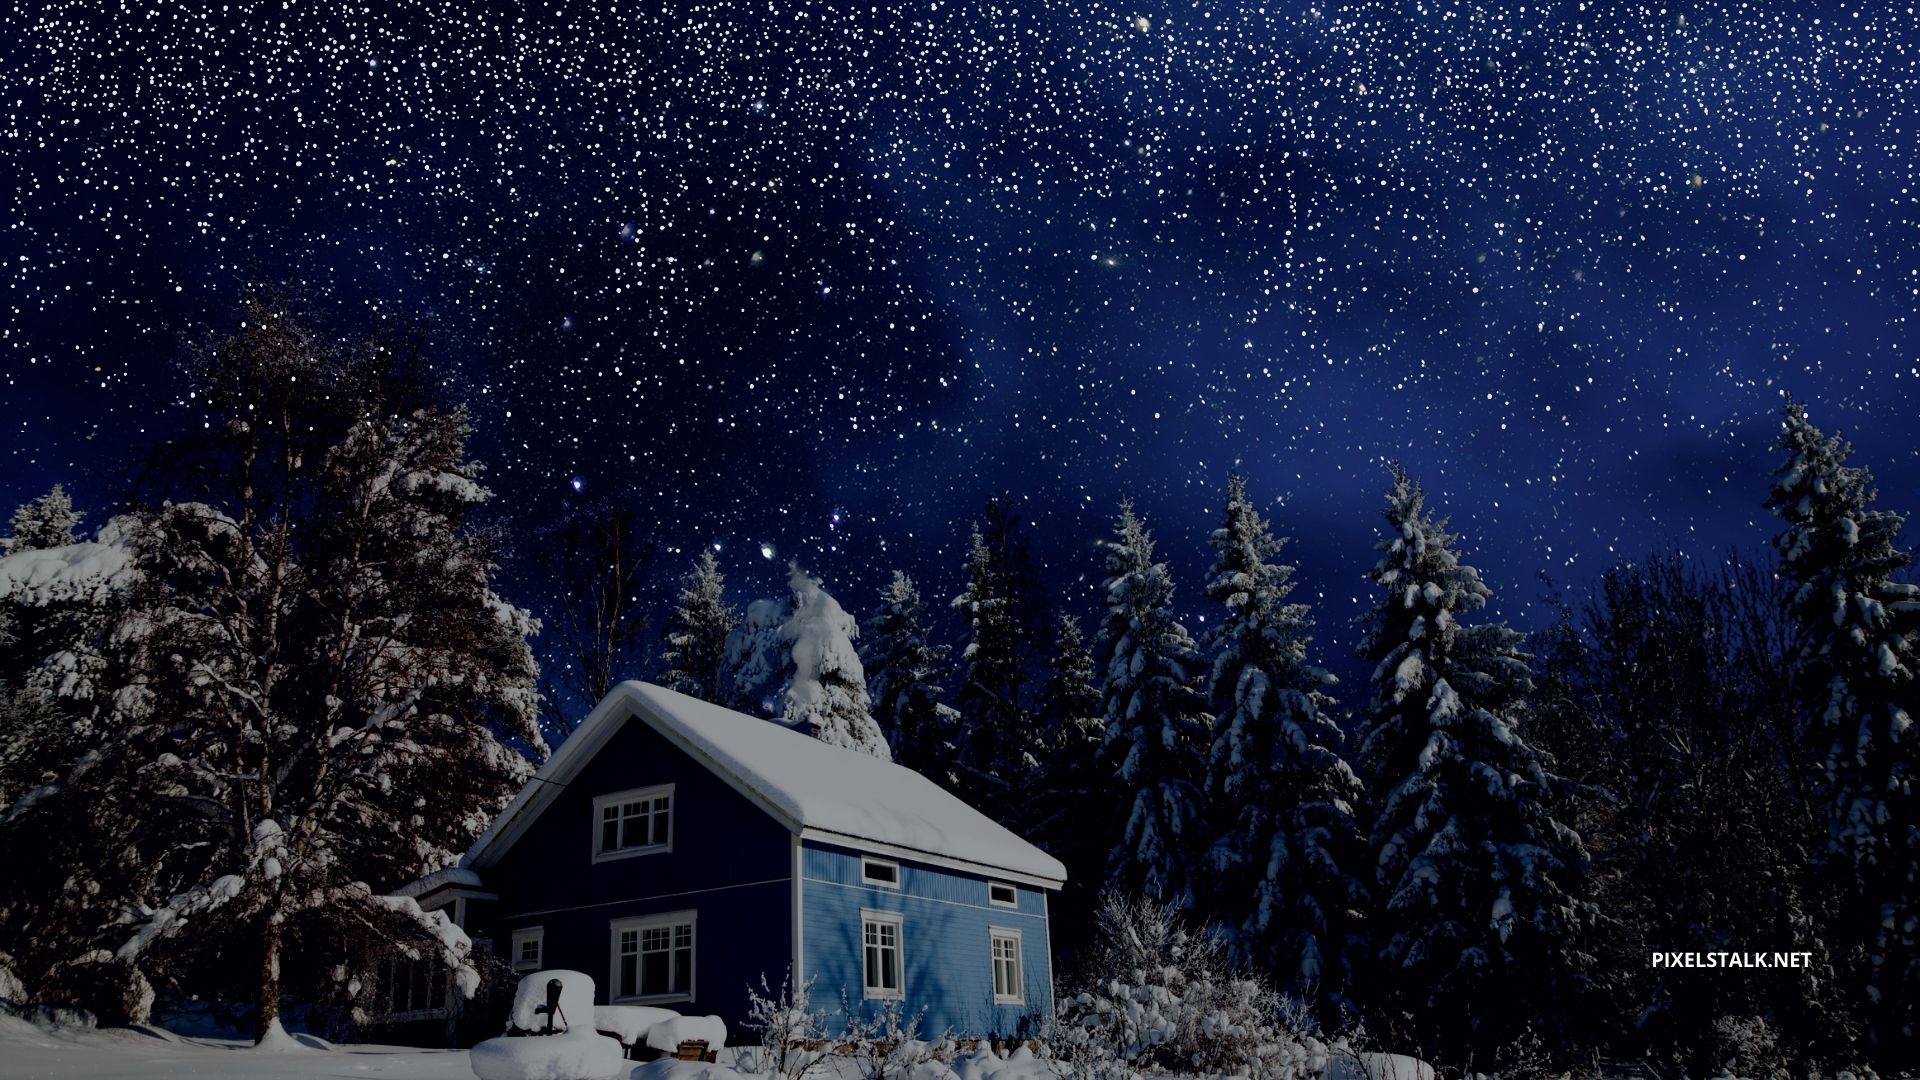 Winter Night Desktop Wallpaper Free download